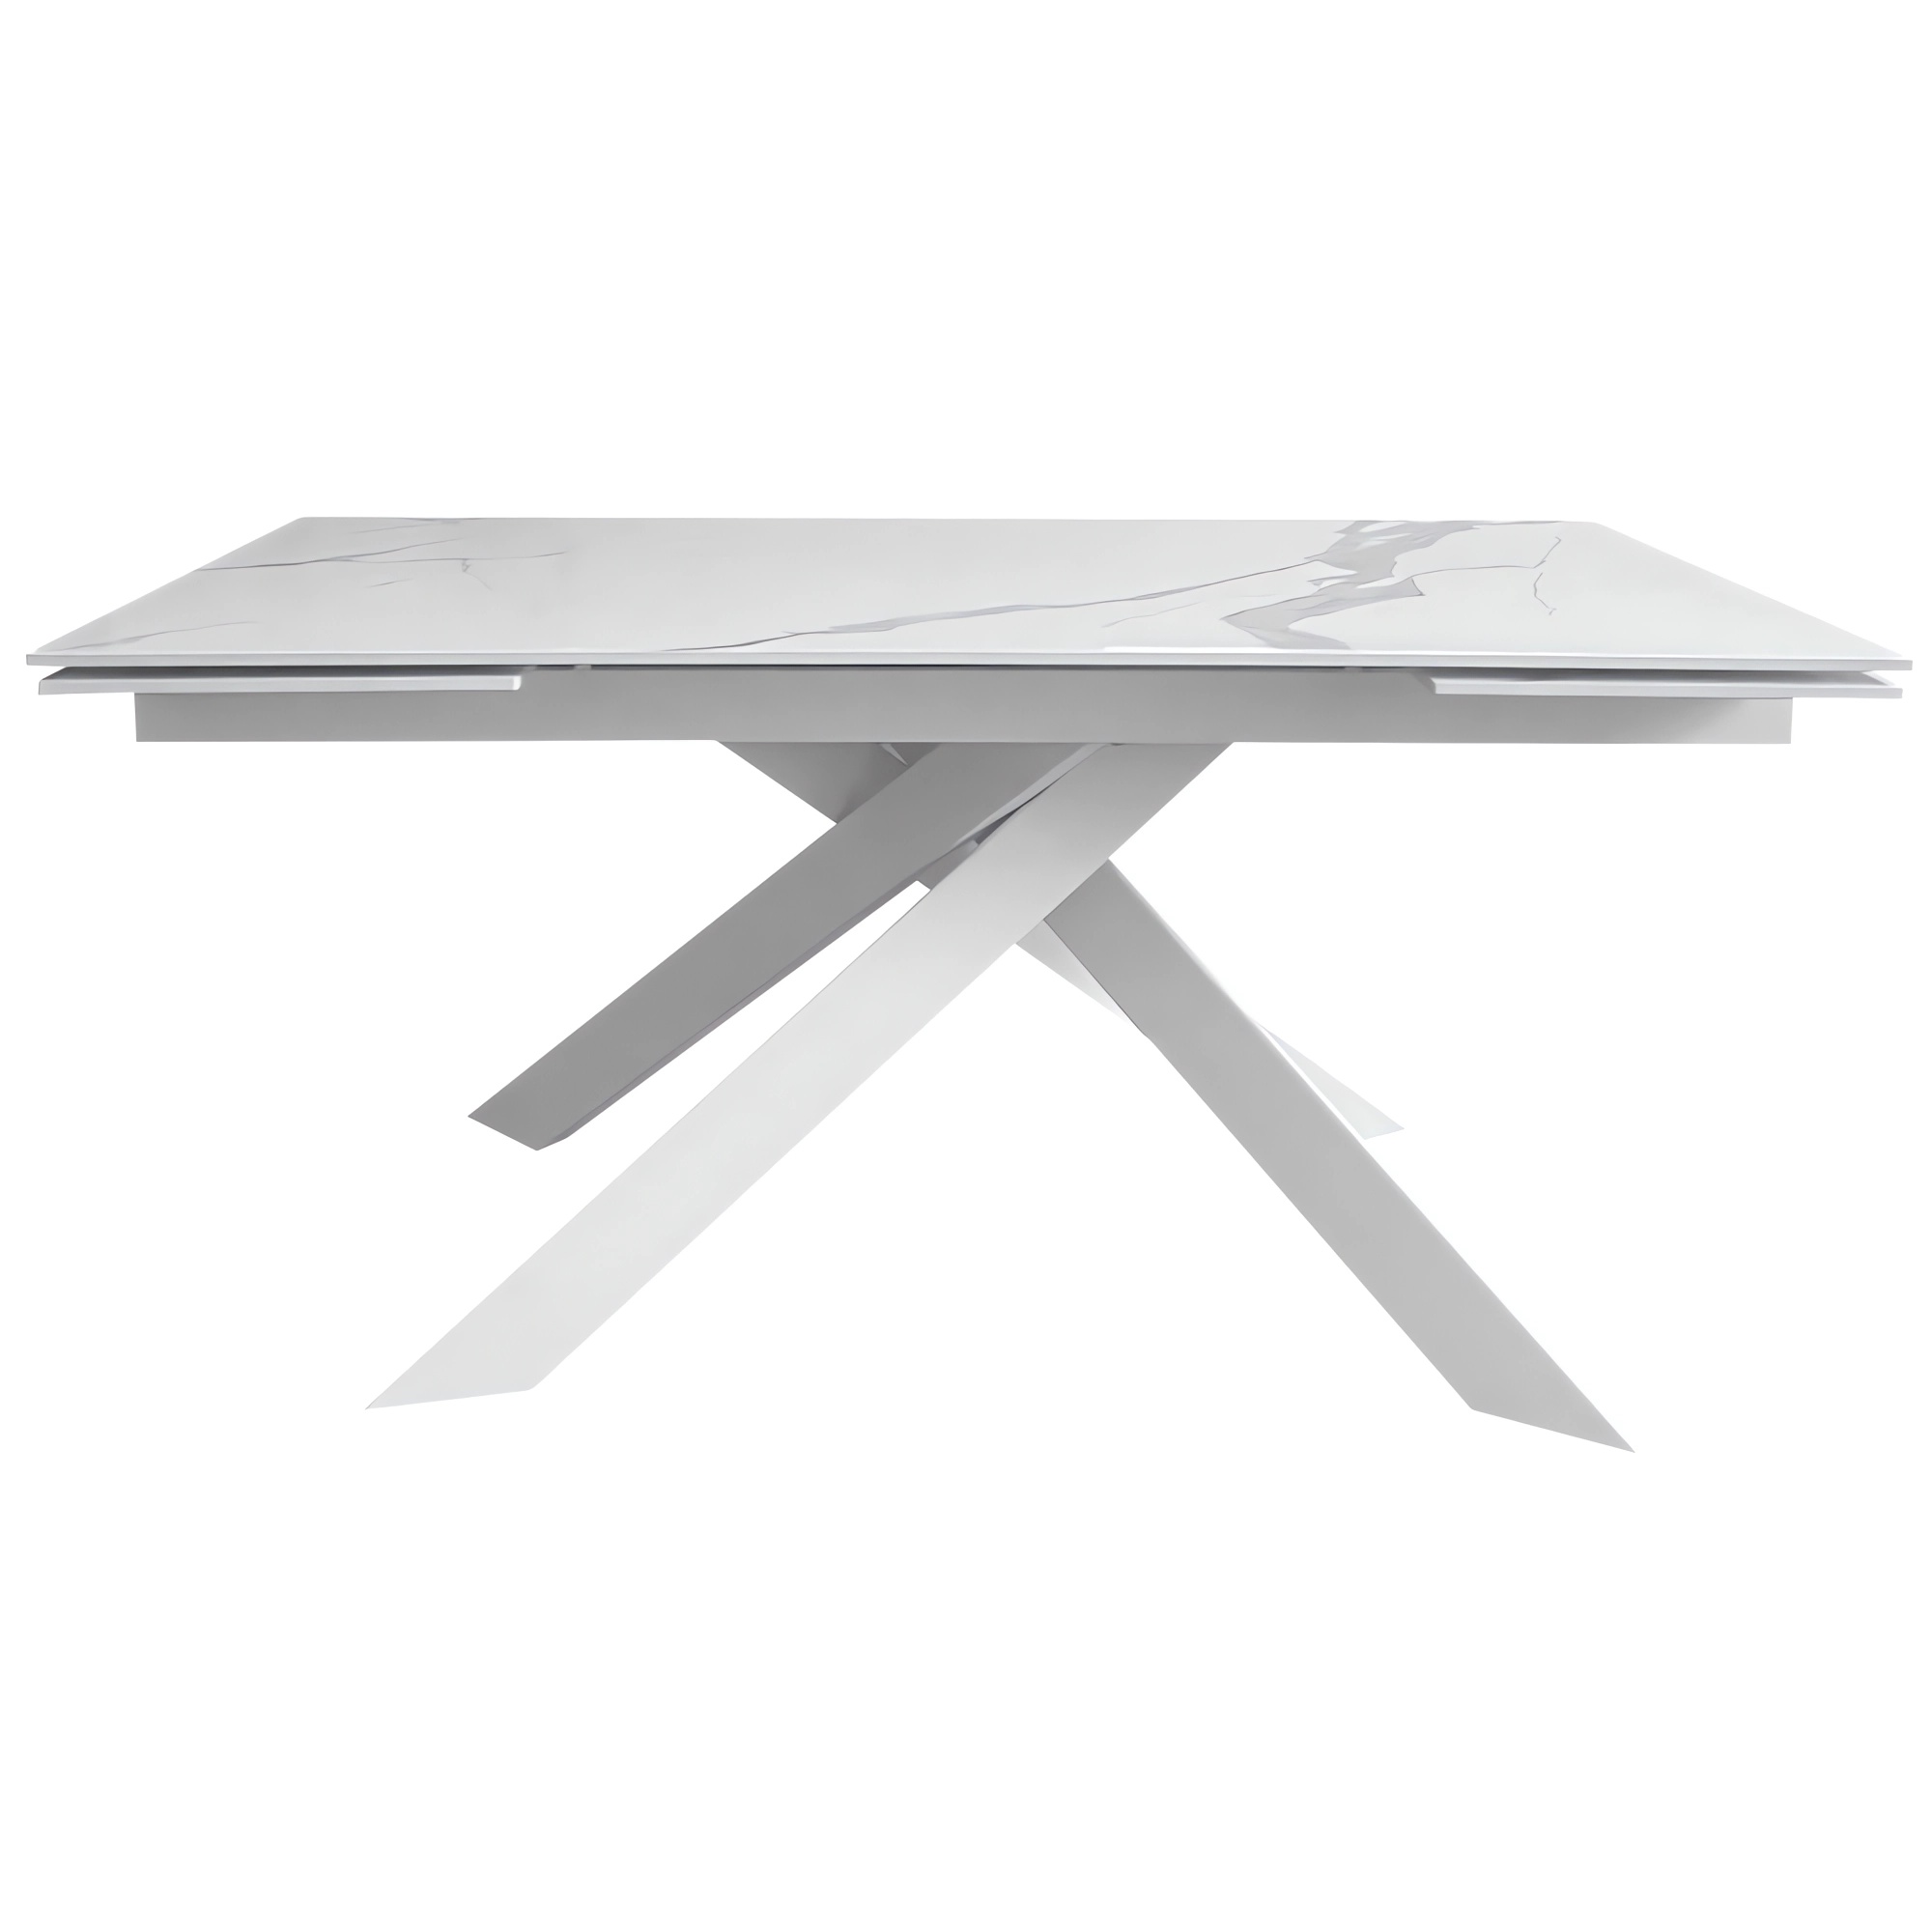 Gracio Carrara White стол раскладной керамика 160-240 см Concepto